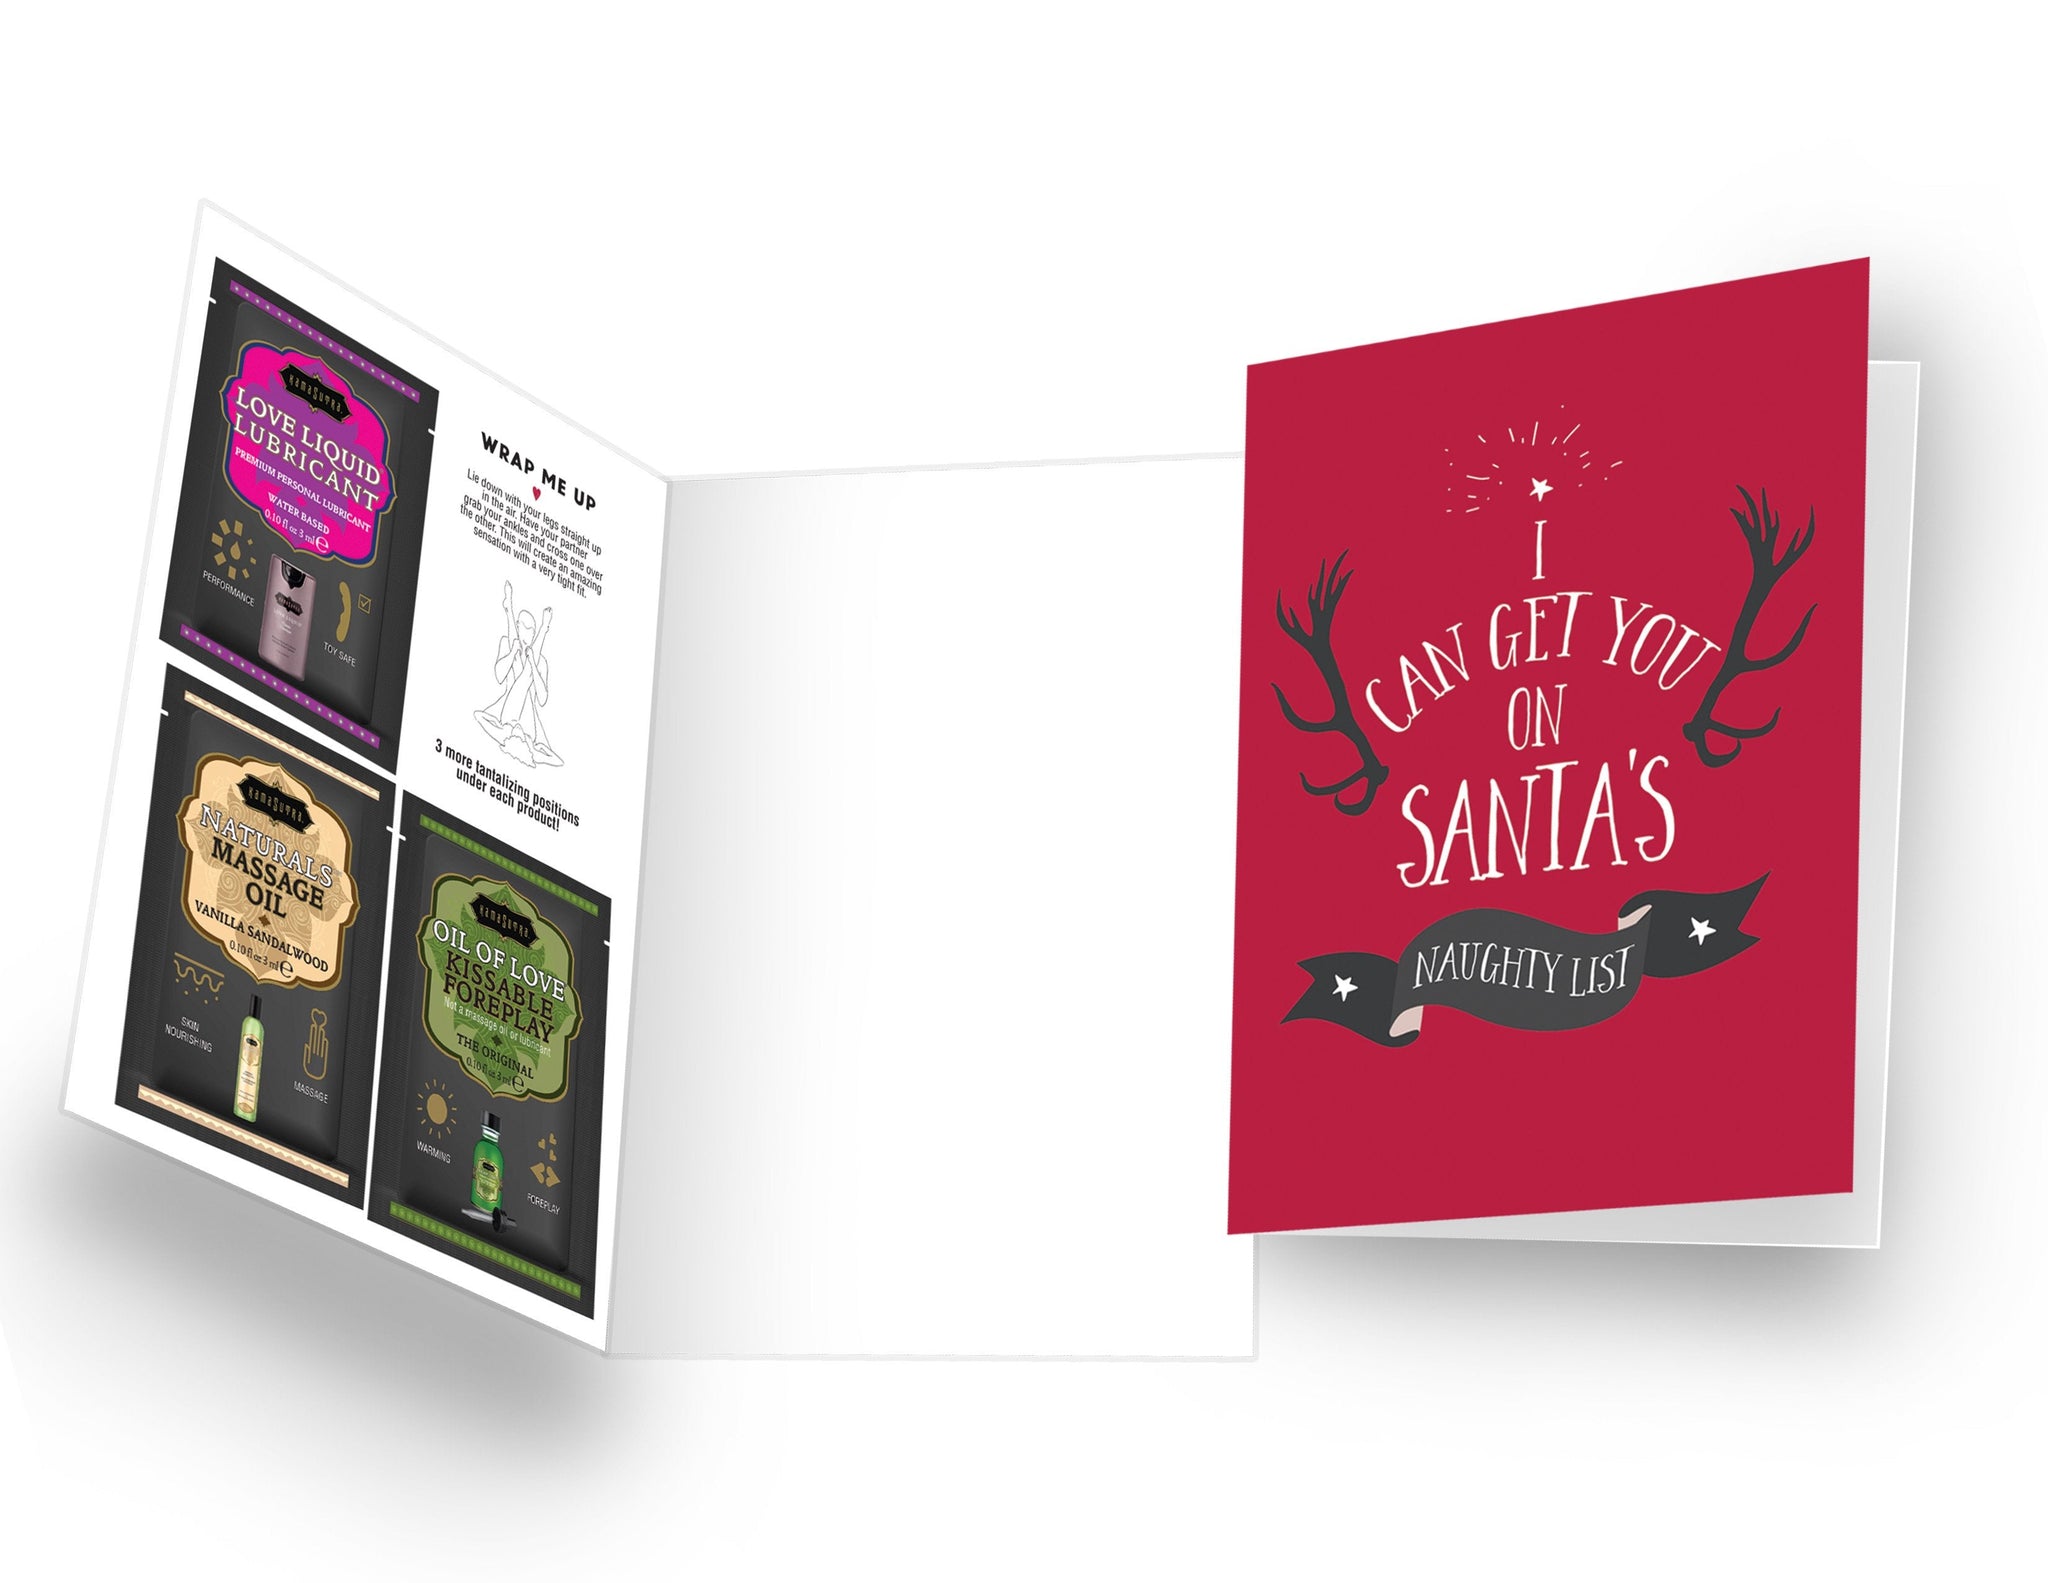 Kama Sutra's Christmas Card - I can get on Santa's naughty list